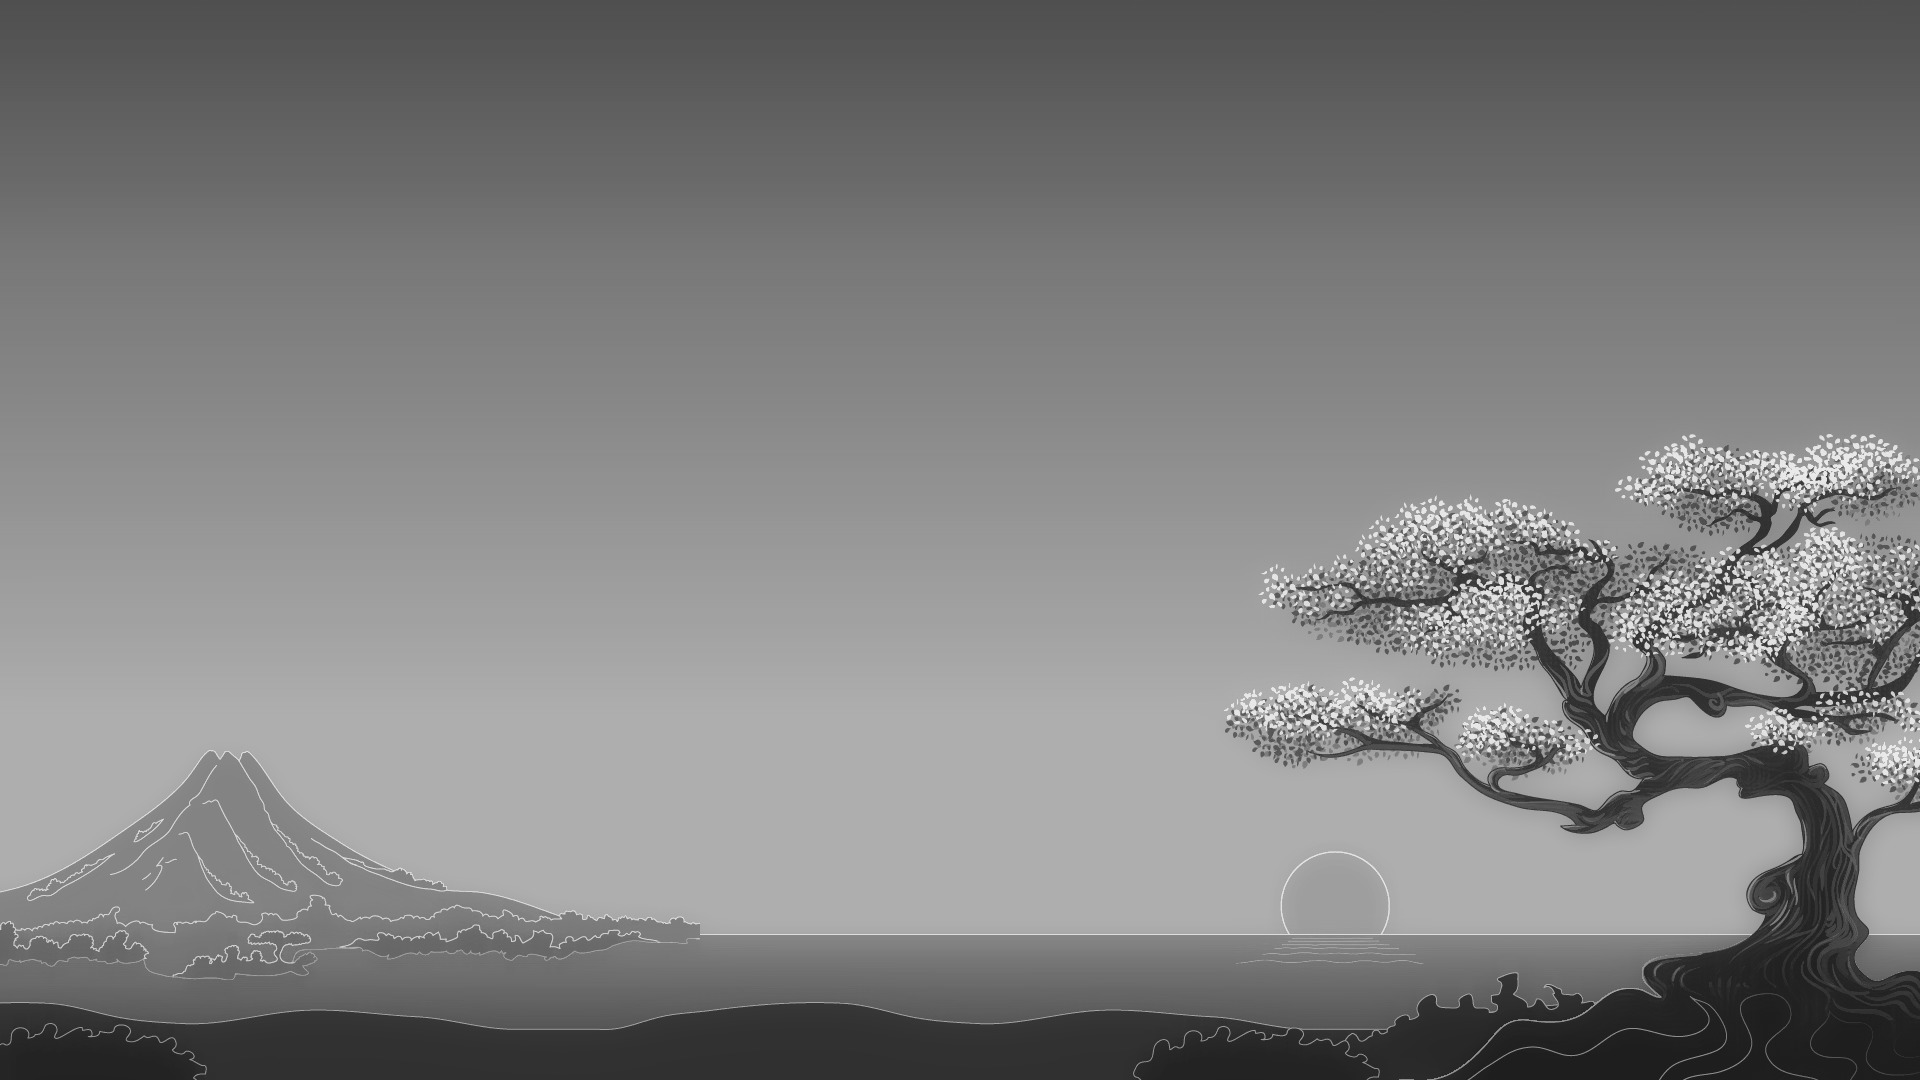 1920x1080 japanese digital art minimalism simple background trees nature landscape mountians horizon sun monochrome mount fuji wallpaper JPG 191 kB HD Wallpaper